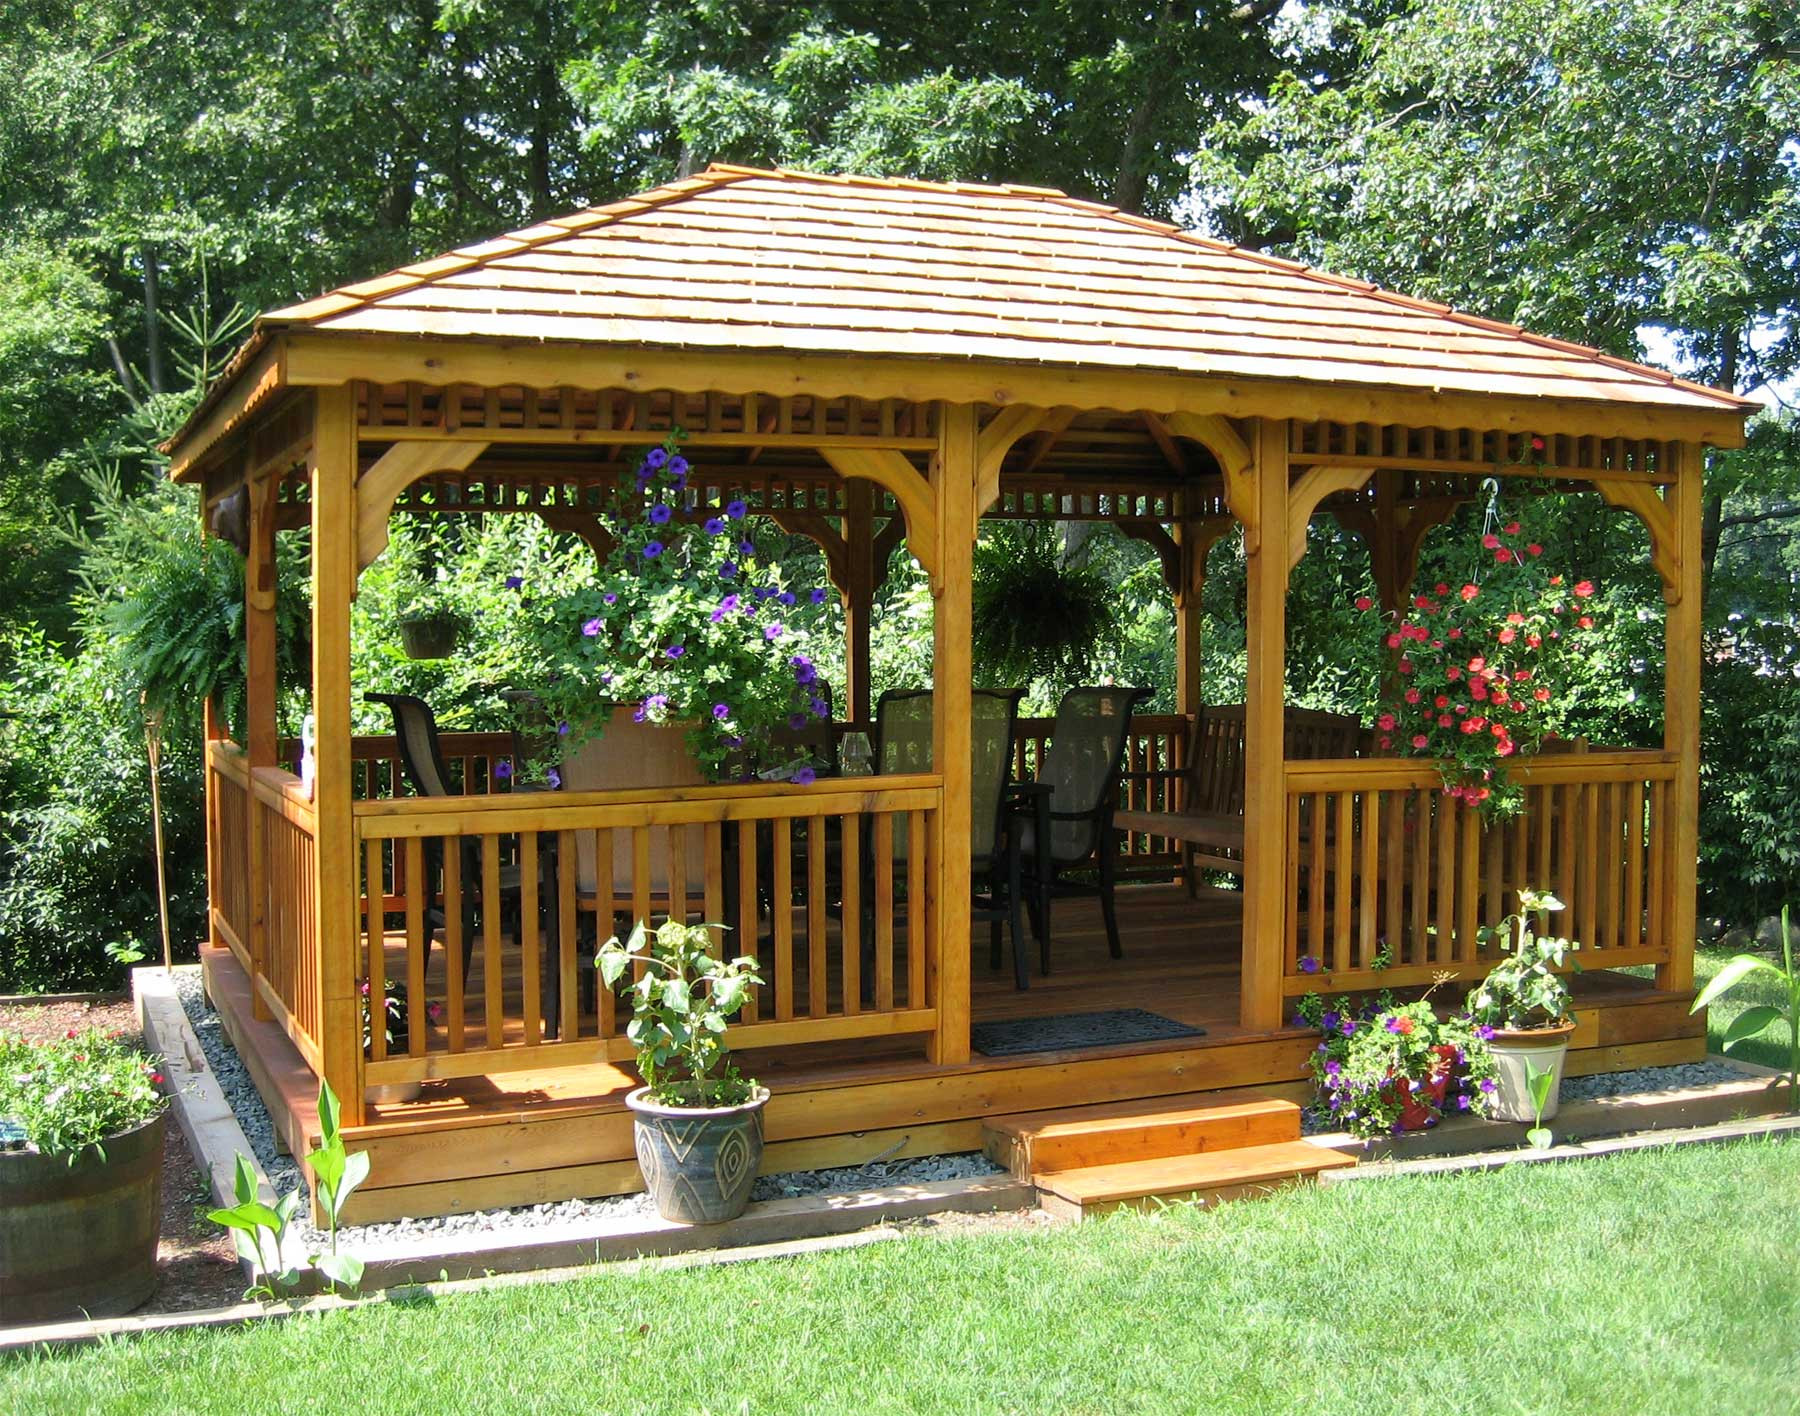 Best ideas about Backyard Gazebo Ideas
. Save or Pin Gazebos Wooden Garden Shed Plans pliments Build Now.